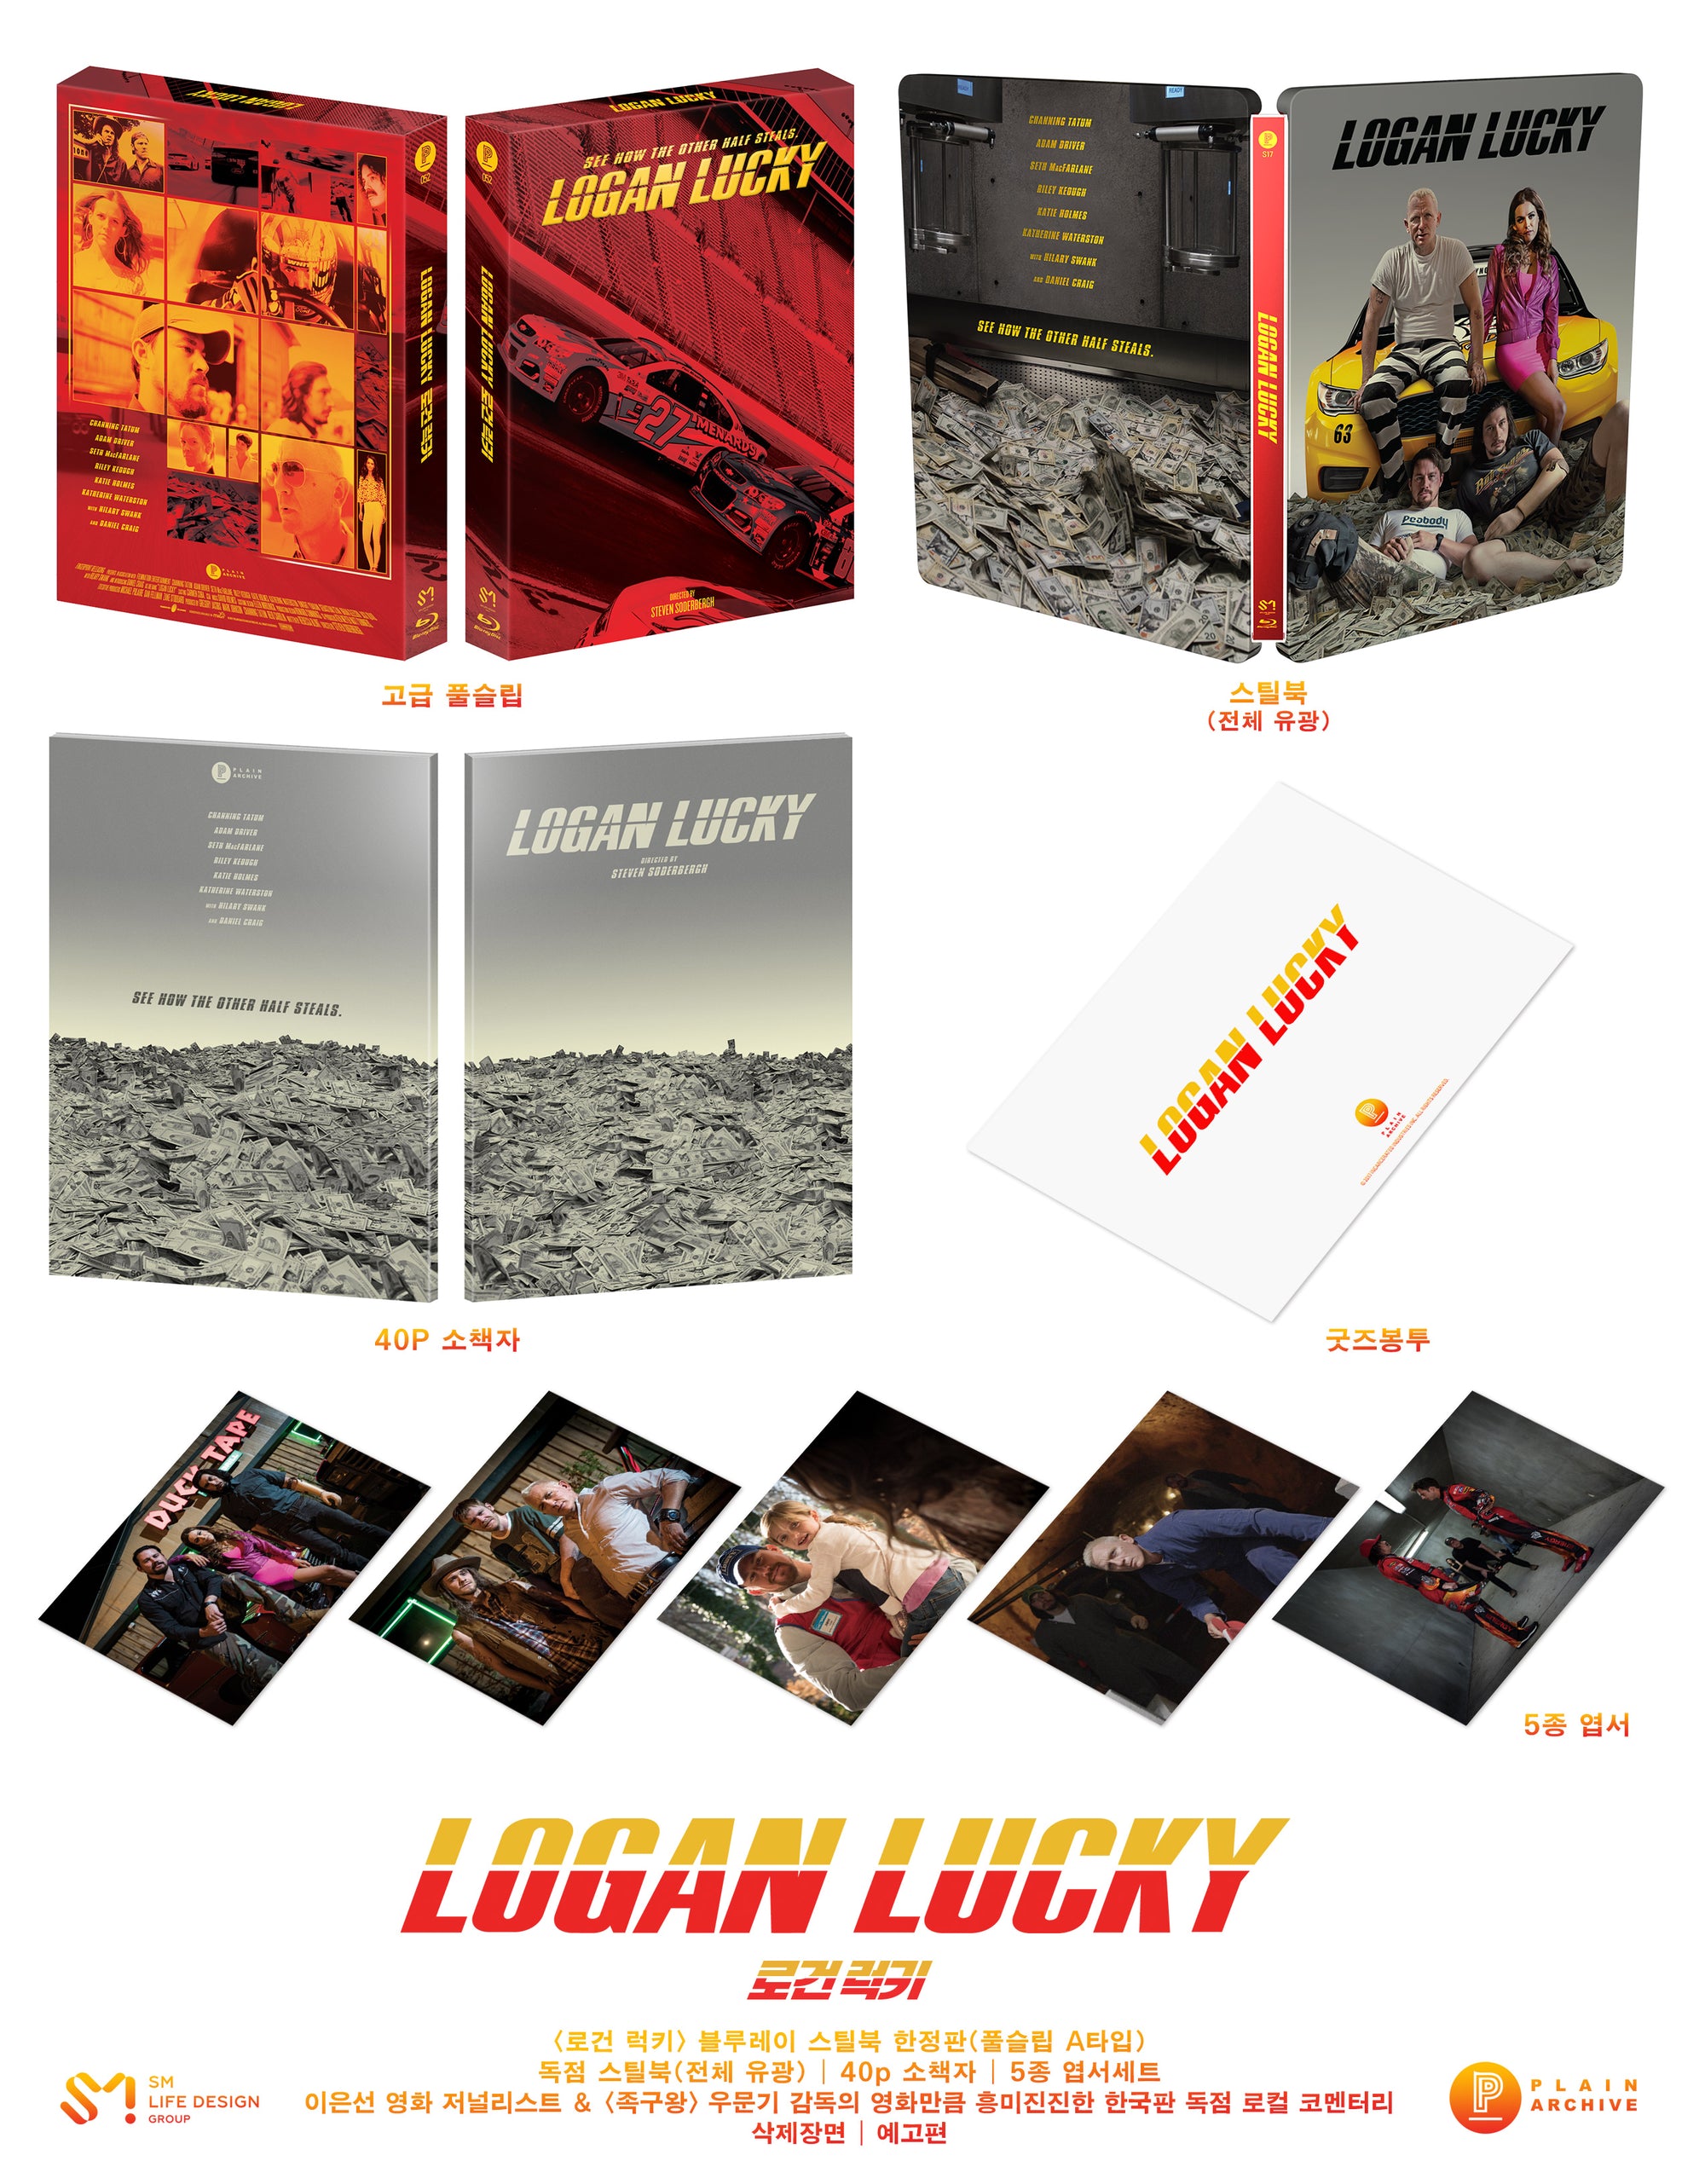 LOGAN LUCKY Blu-ray Steelbook: Full Slip (Type A)